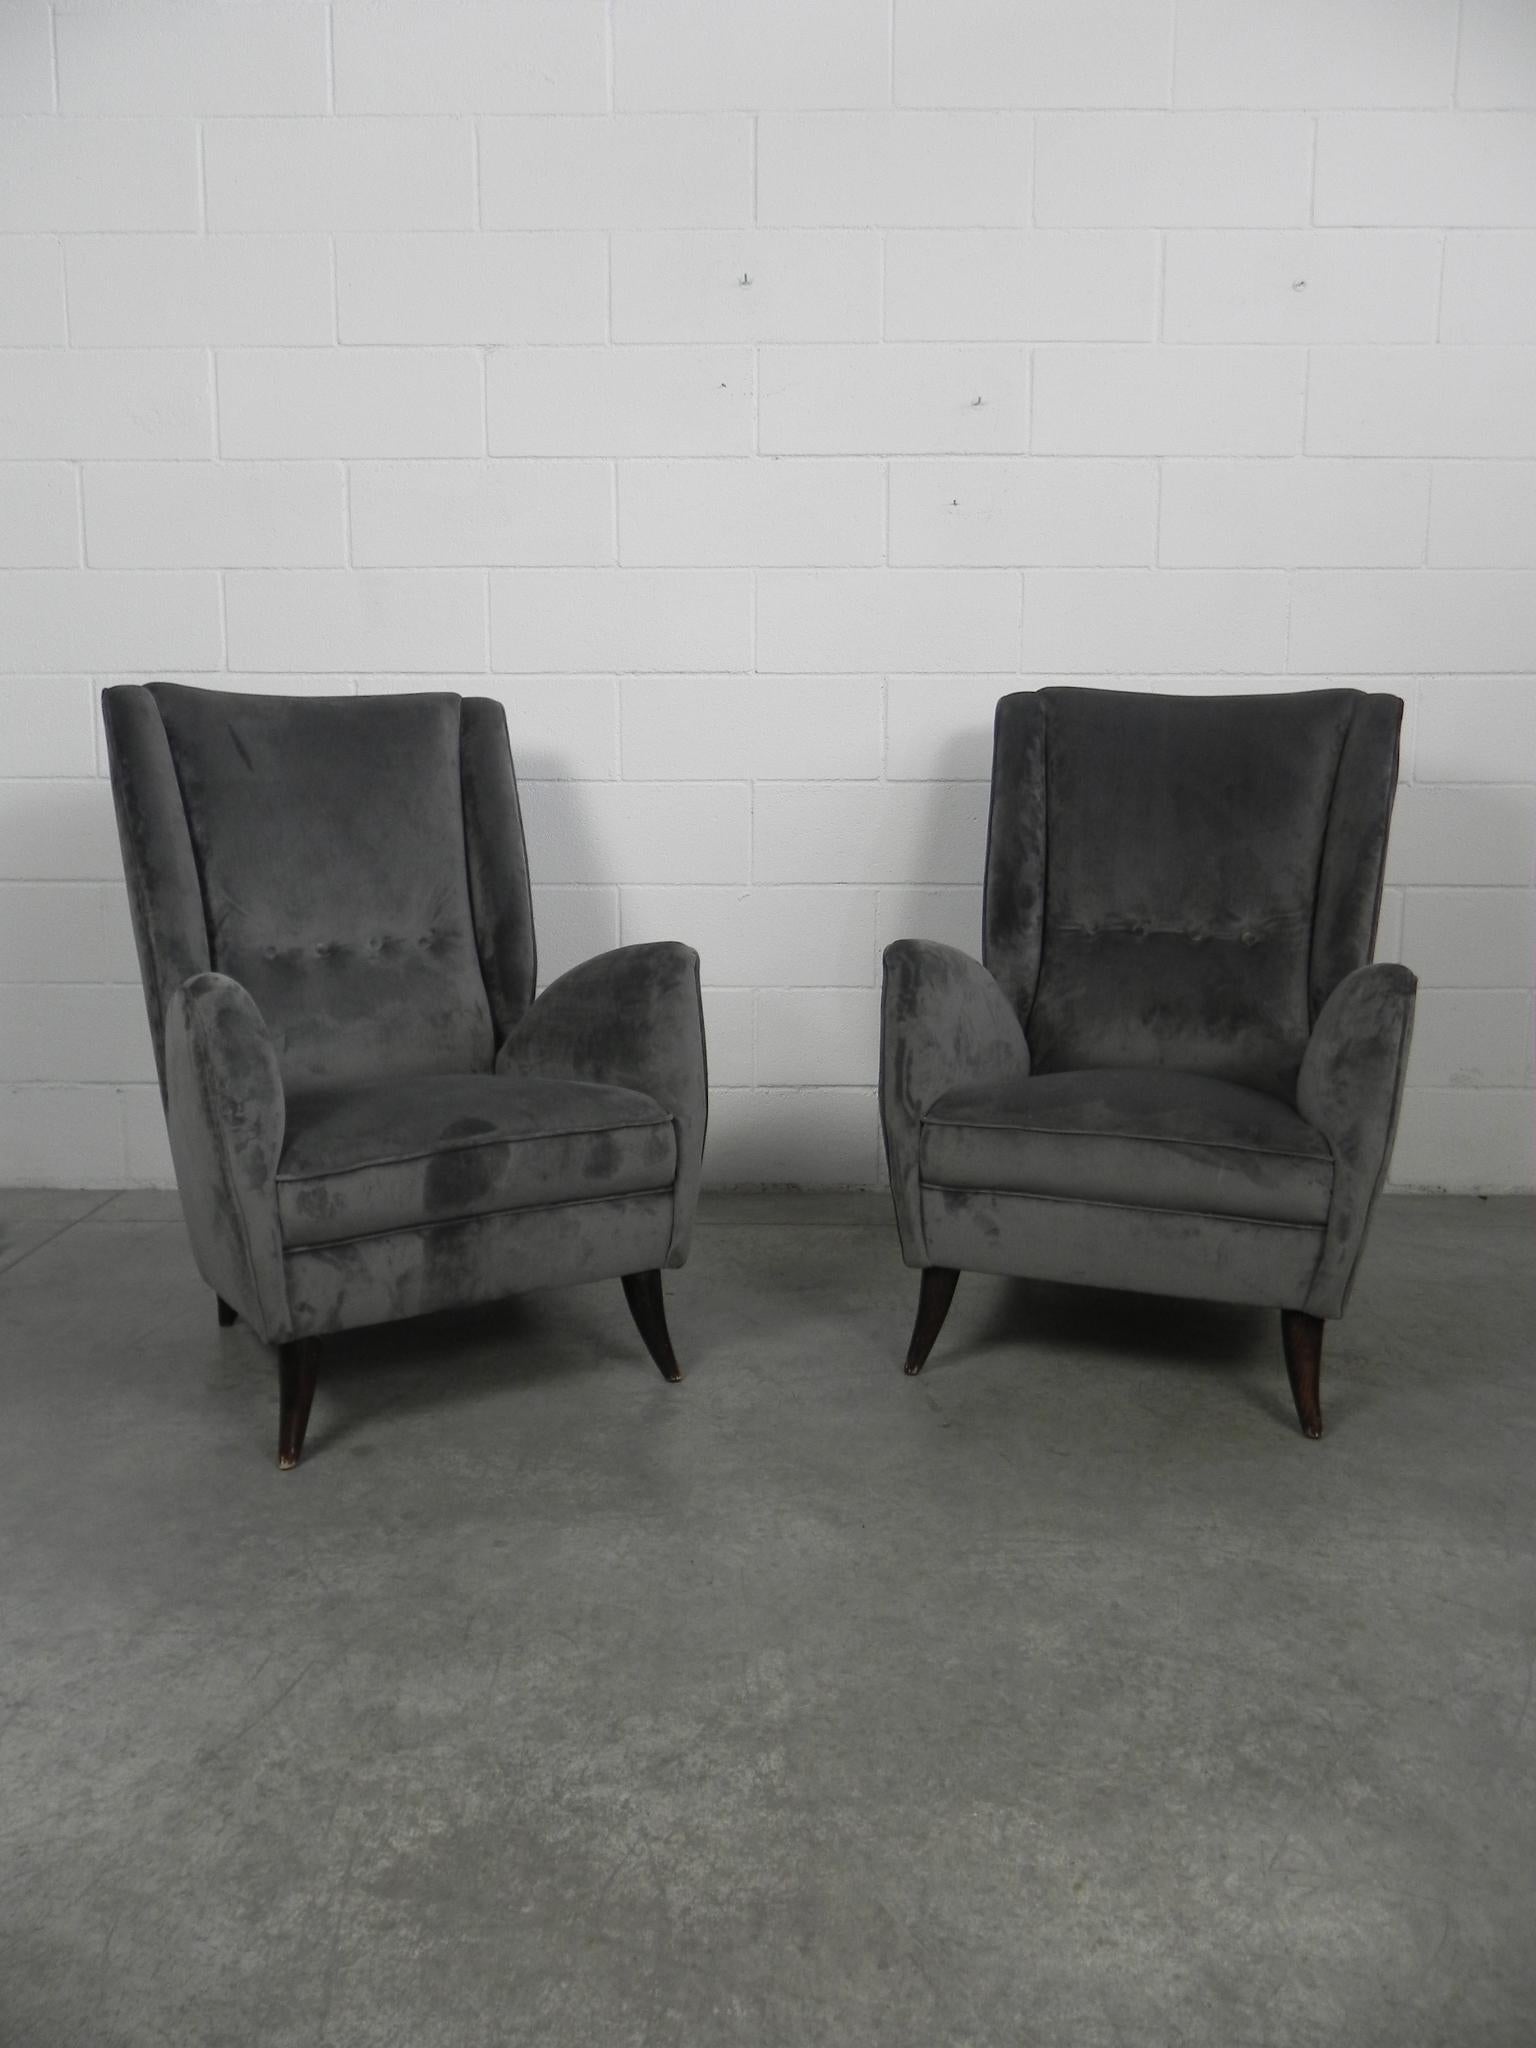 Pair of Gio Ponti armchairs velvet upholstery, I.S.A. Bergamo manufacturer, Italy, 1950s.